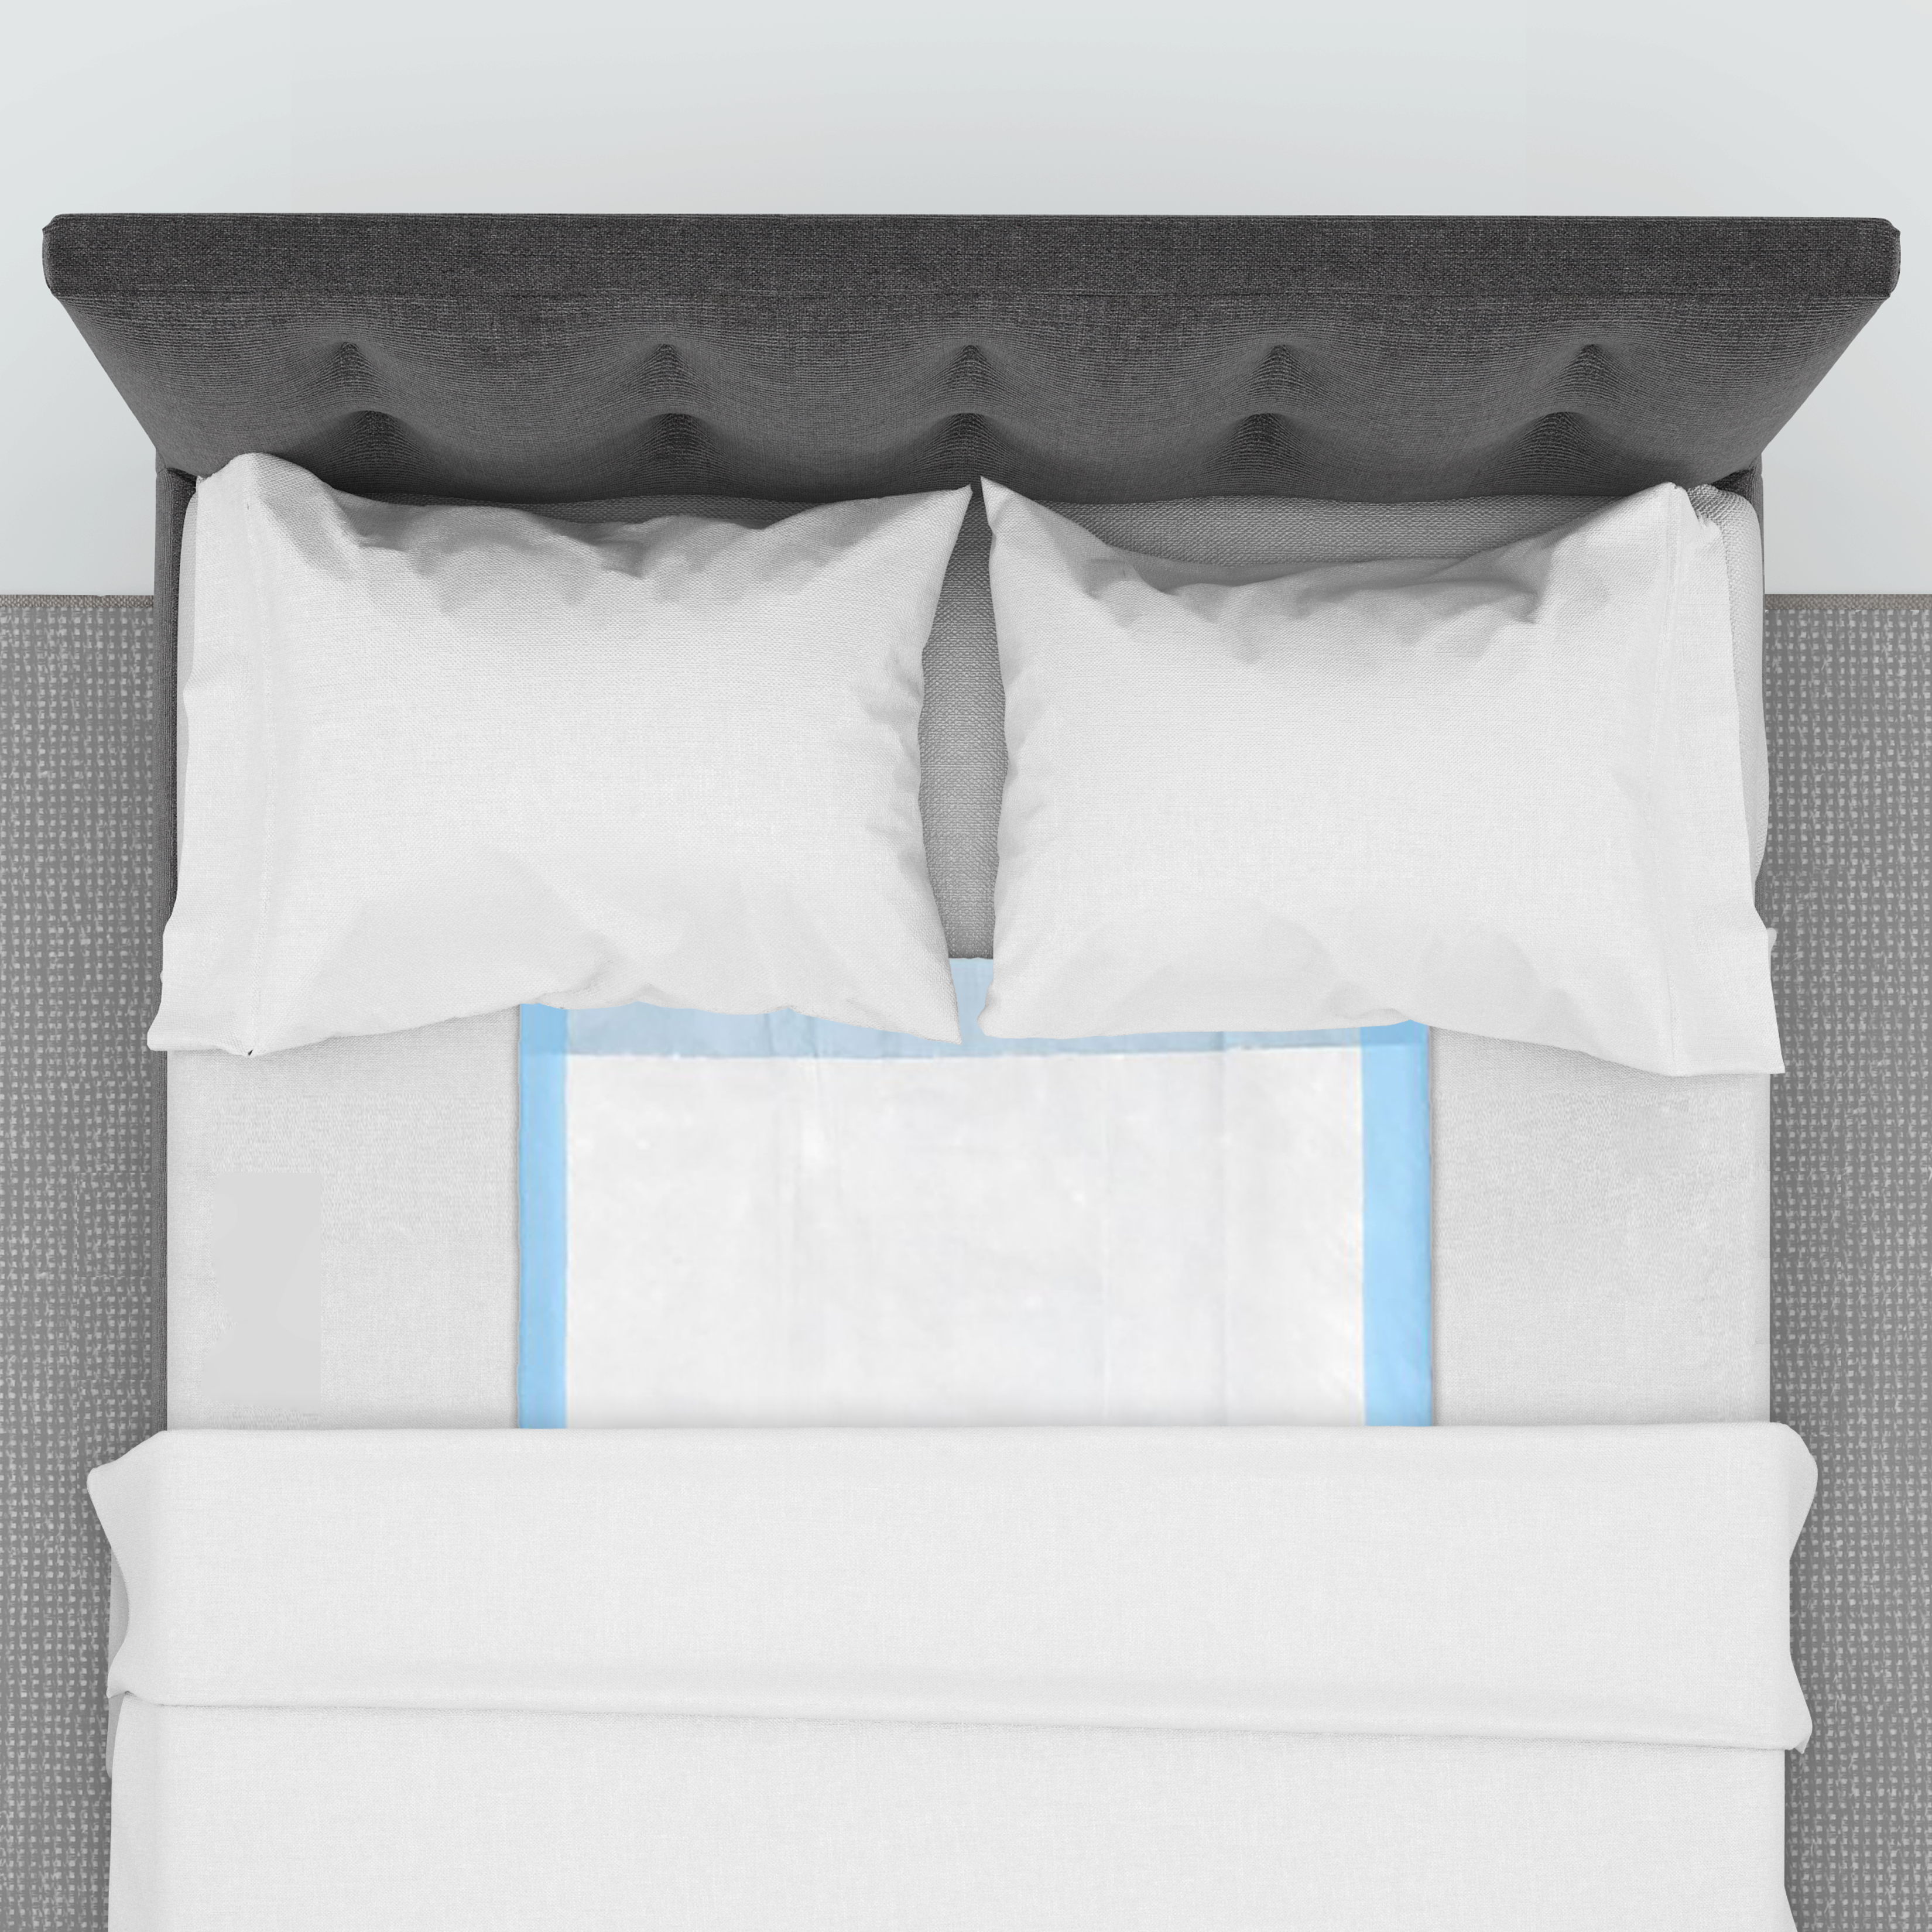 Because Maximum Bed Protectors